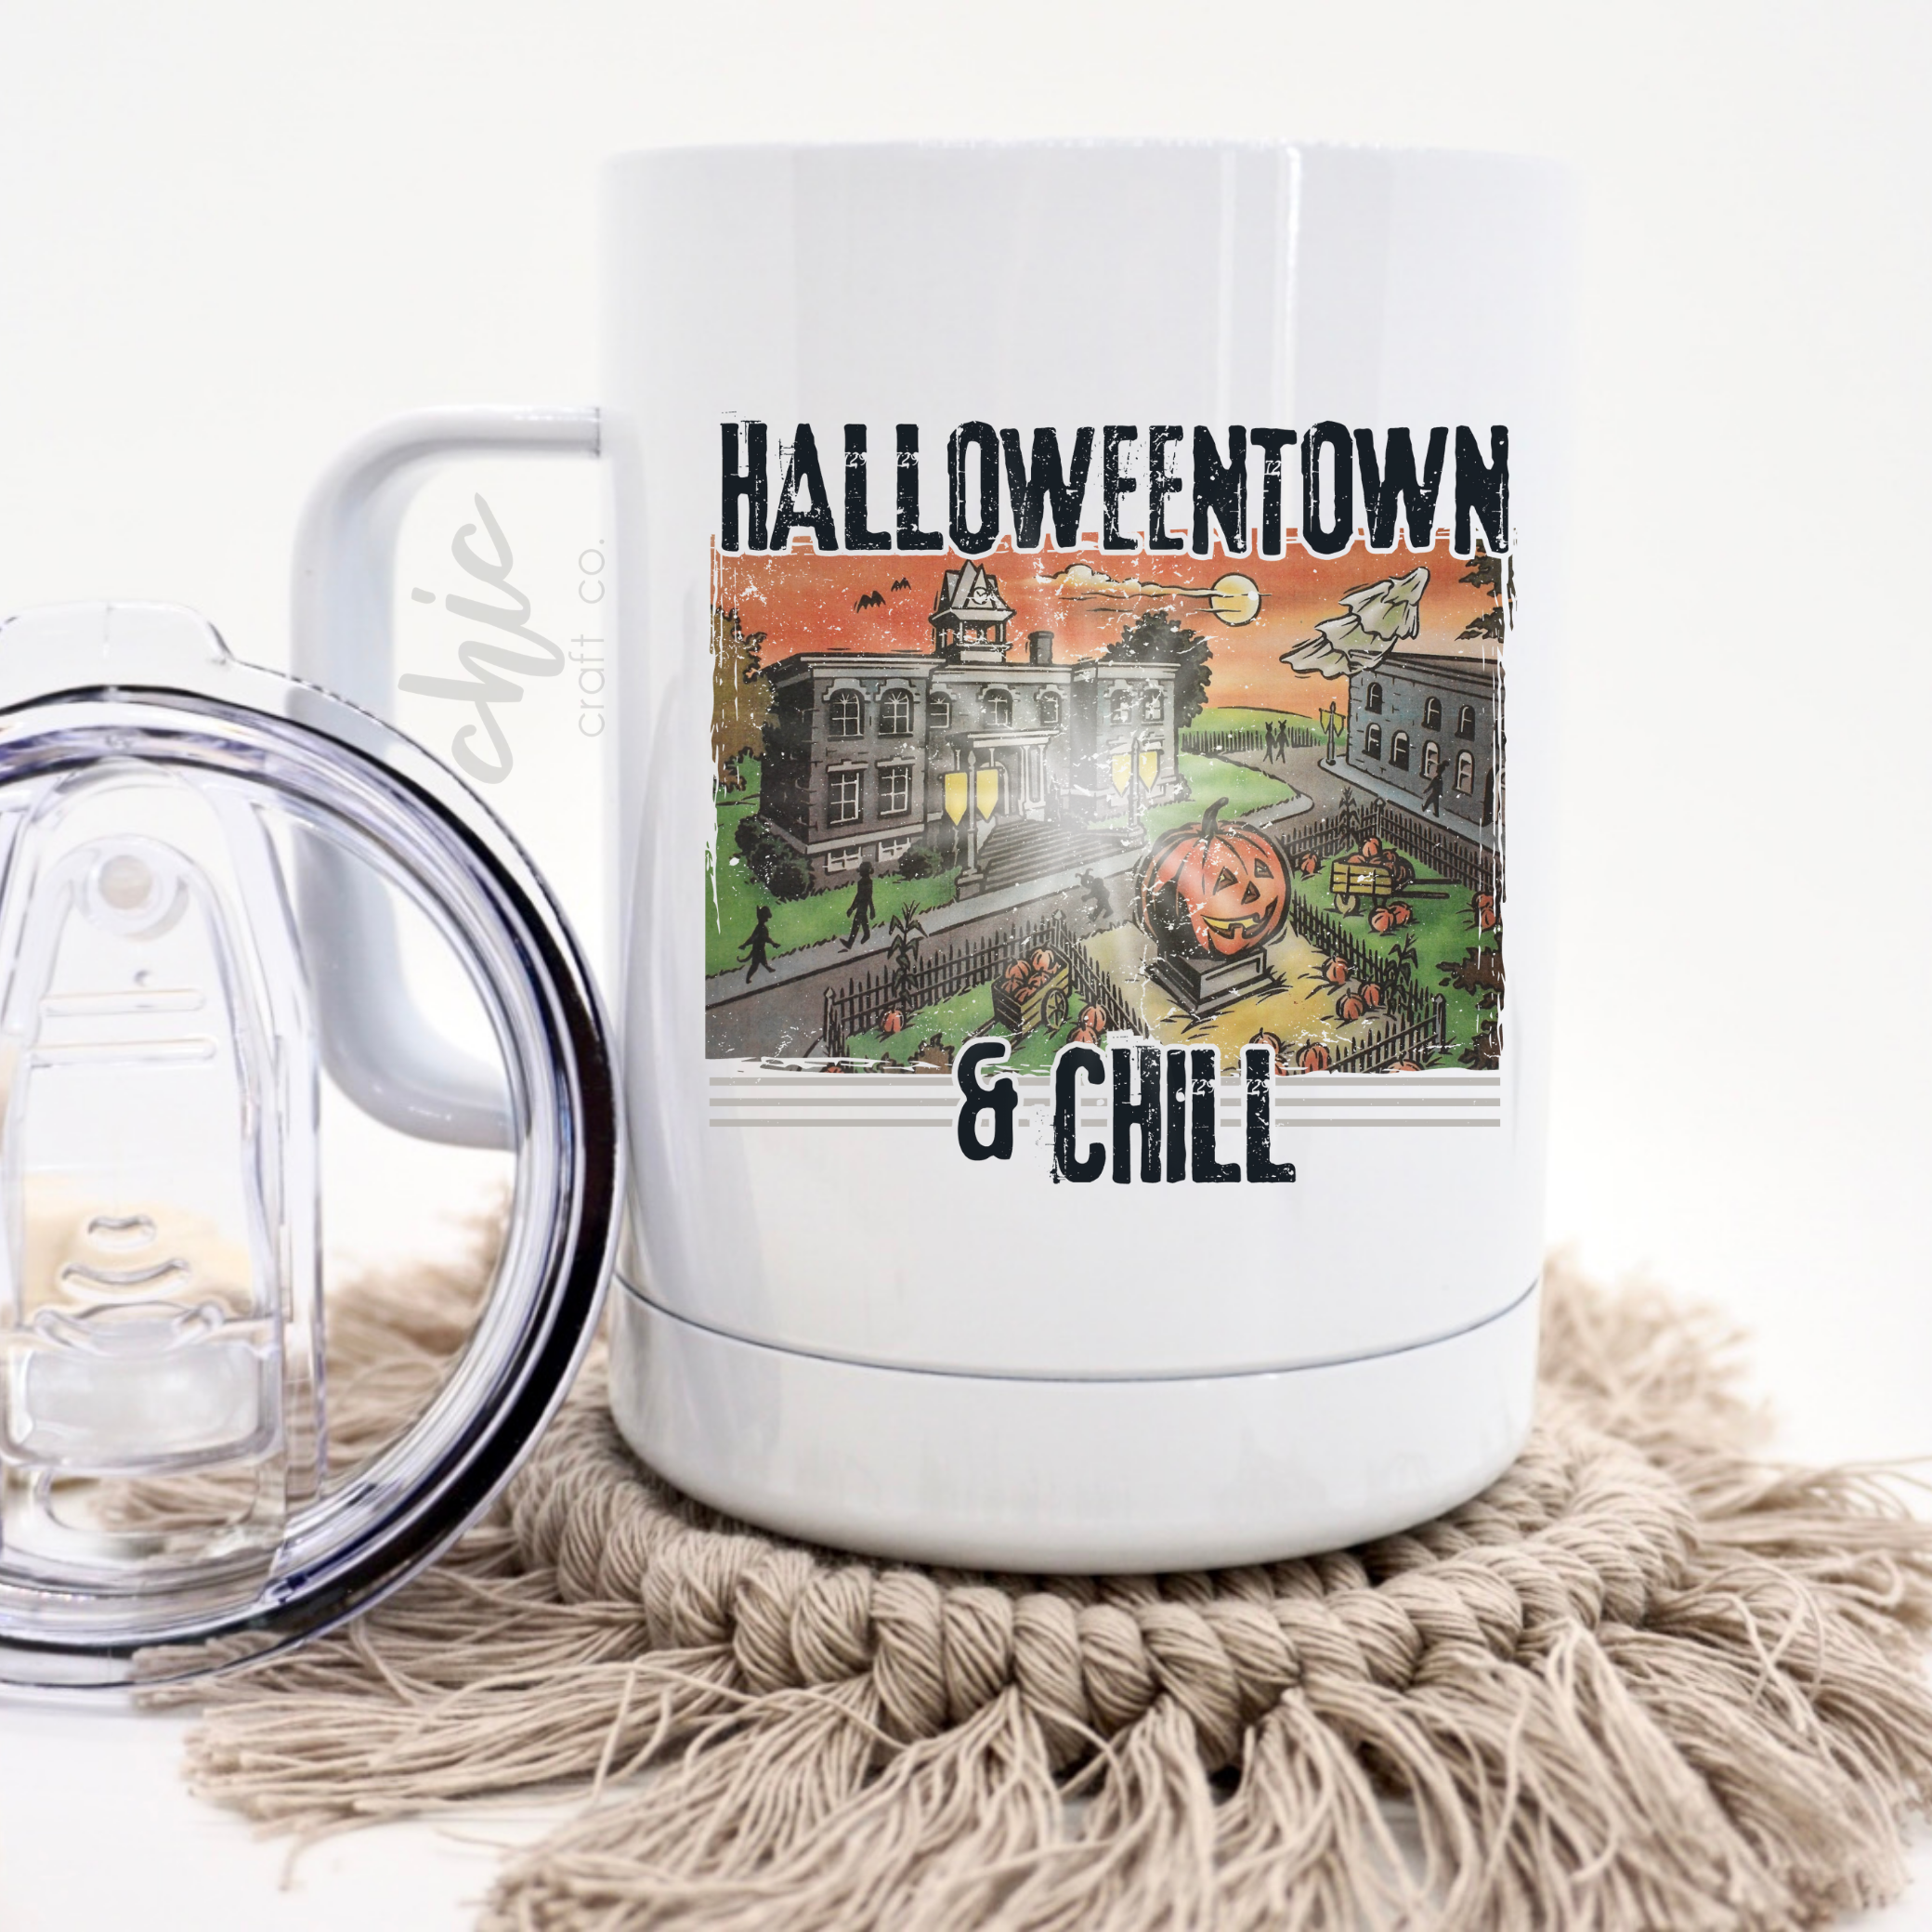 Halloweentown & Chill